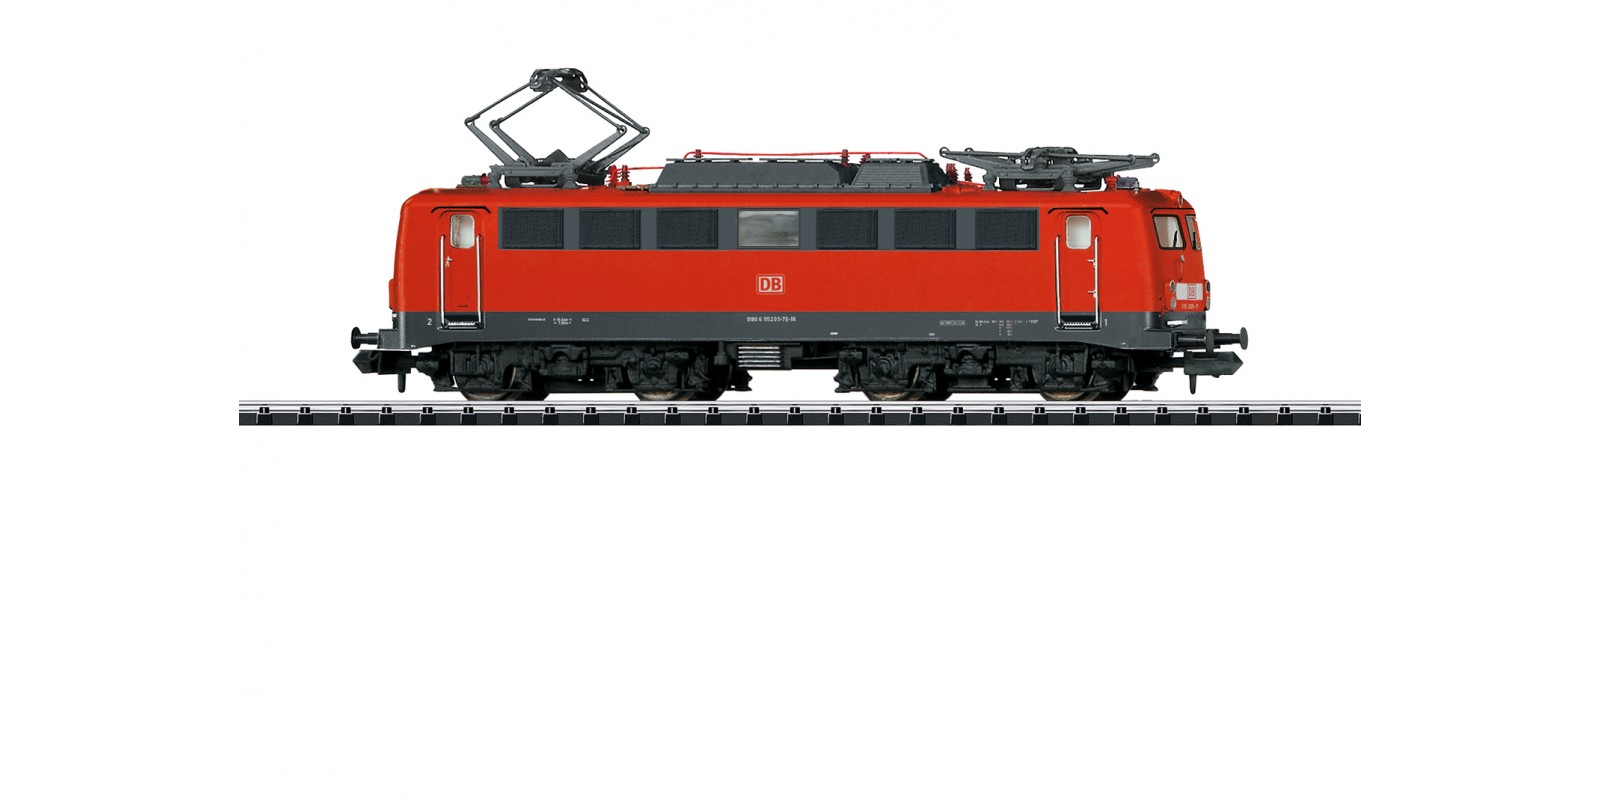 T16107 Class 115 electric locomotive